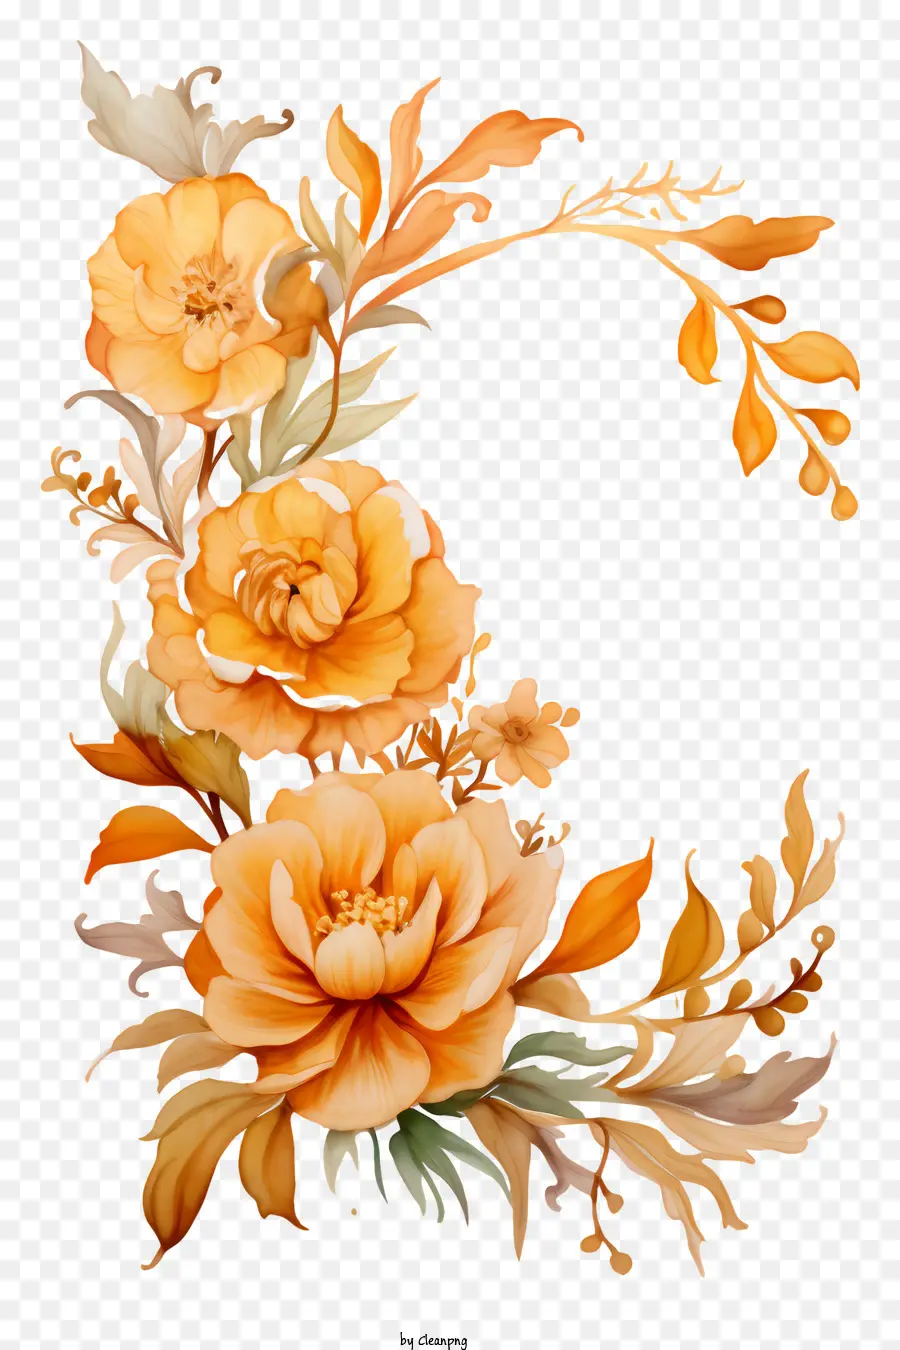 watercolor painting bouquet of orange flowers leaves and vines wreath shape round arrangement